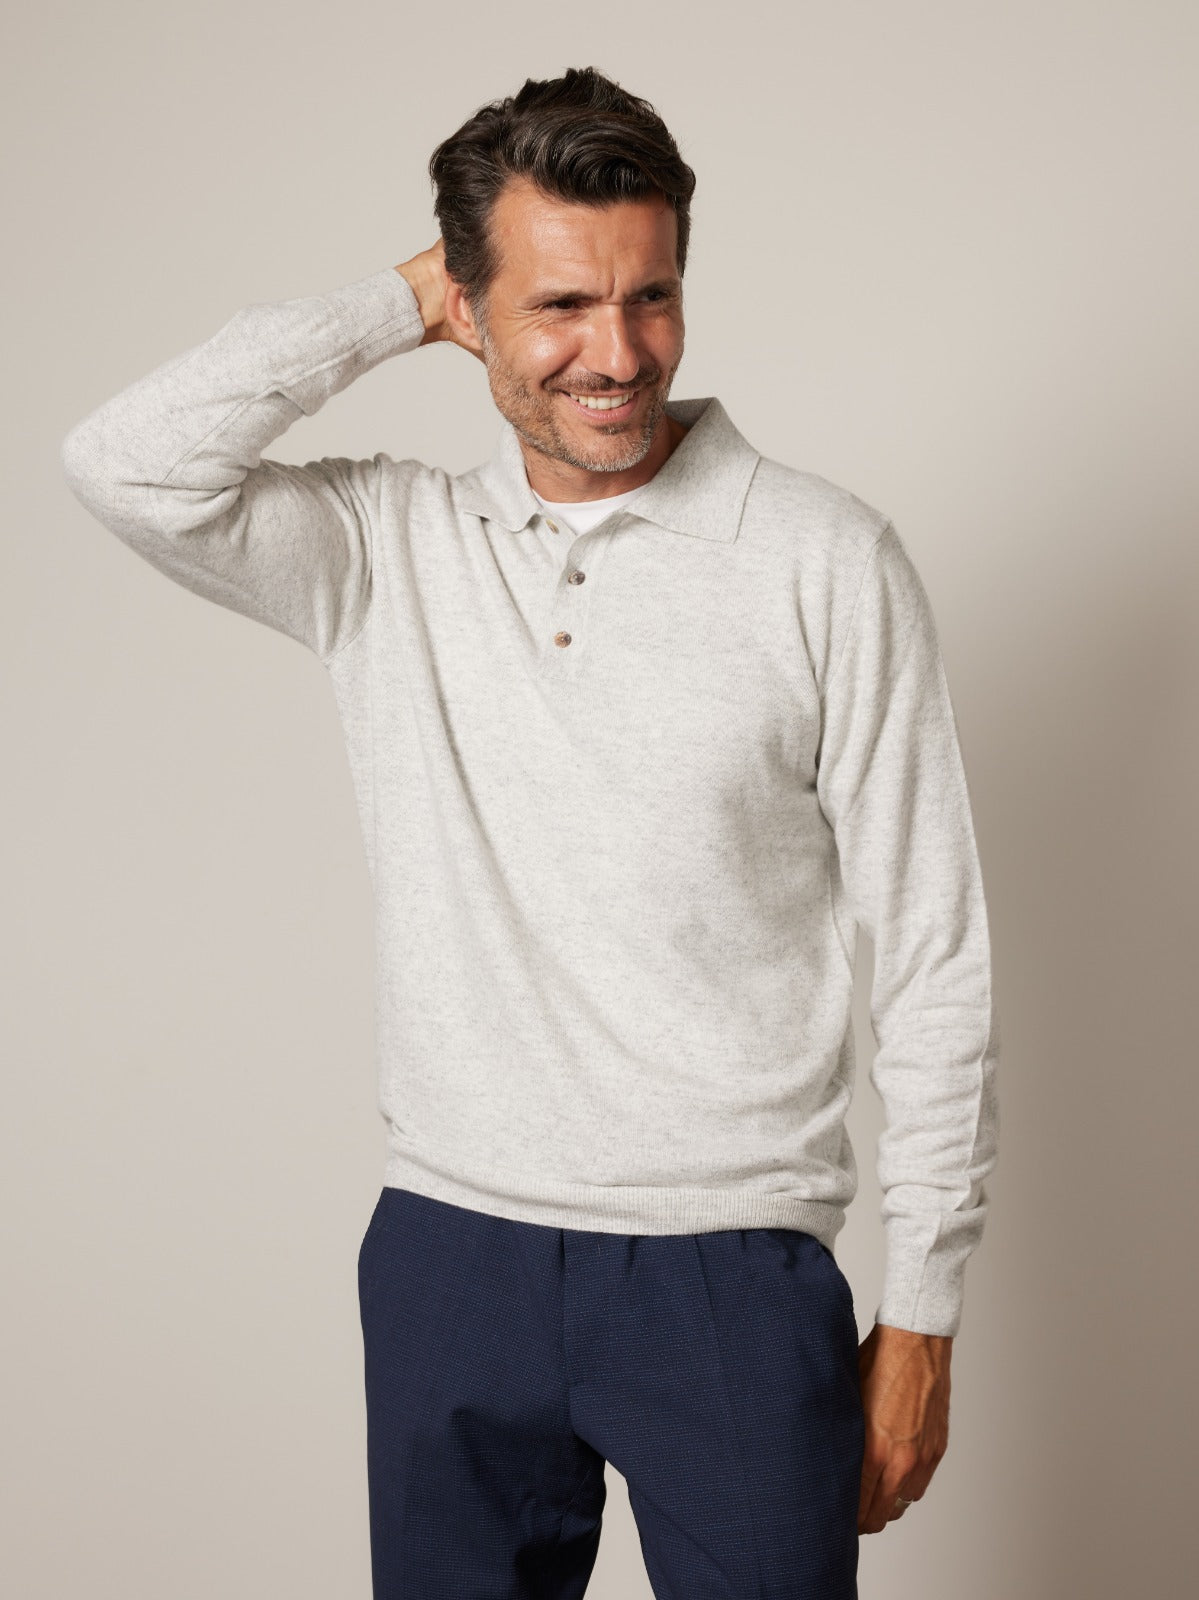 4207 - Men's three-button long-sleeved polo shirt